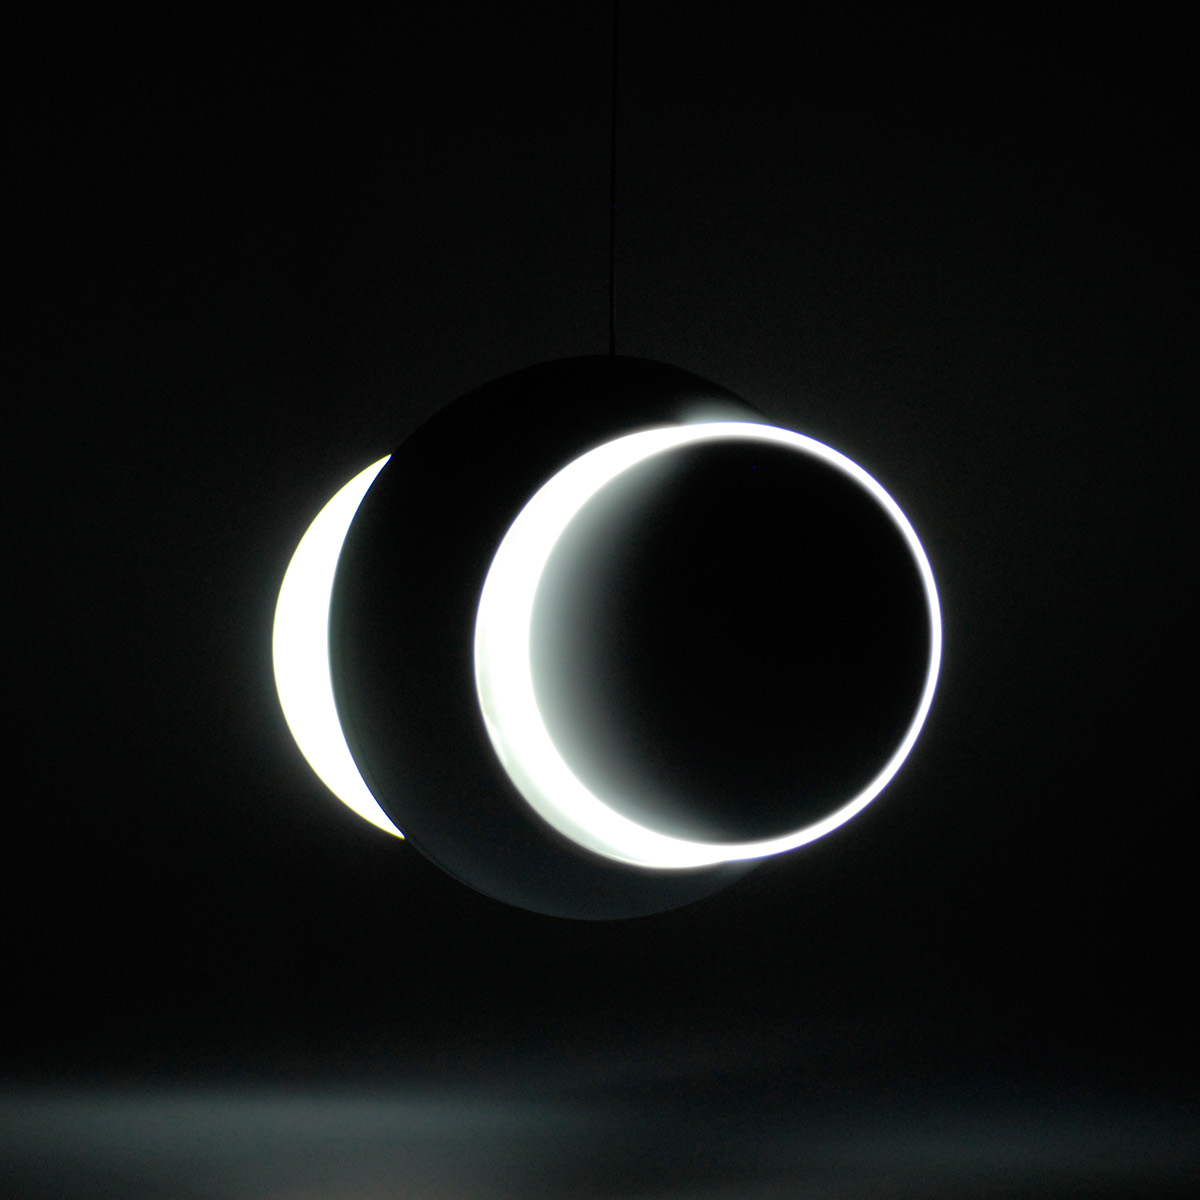 koizumi light design lamp Lamp design light nissyoku péter toronyi Competition solar eclipse eclipse Sun moon dark